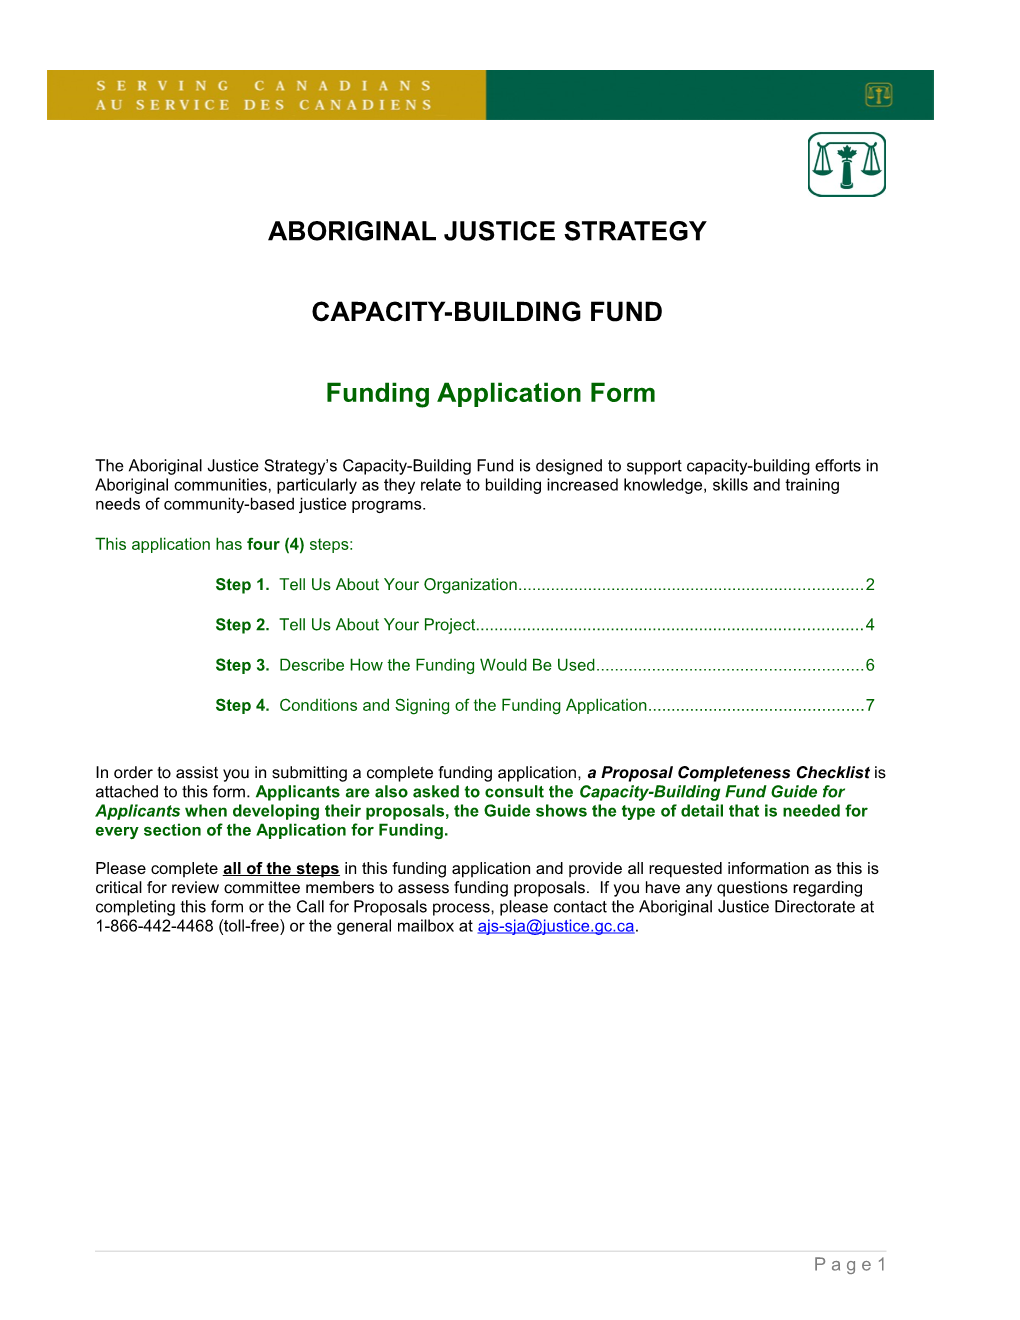 Aboriginal Justice Strategy S Aboriginal Justice Strategy - Application for Capacity-Building